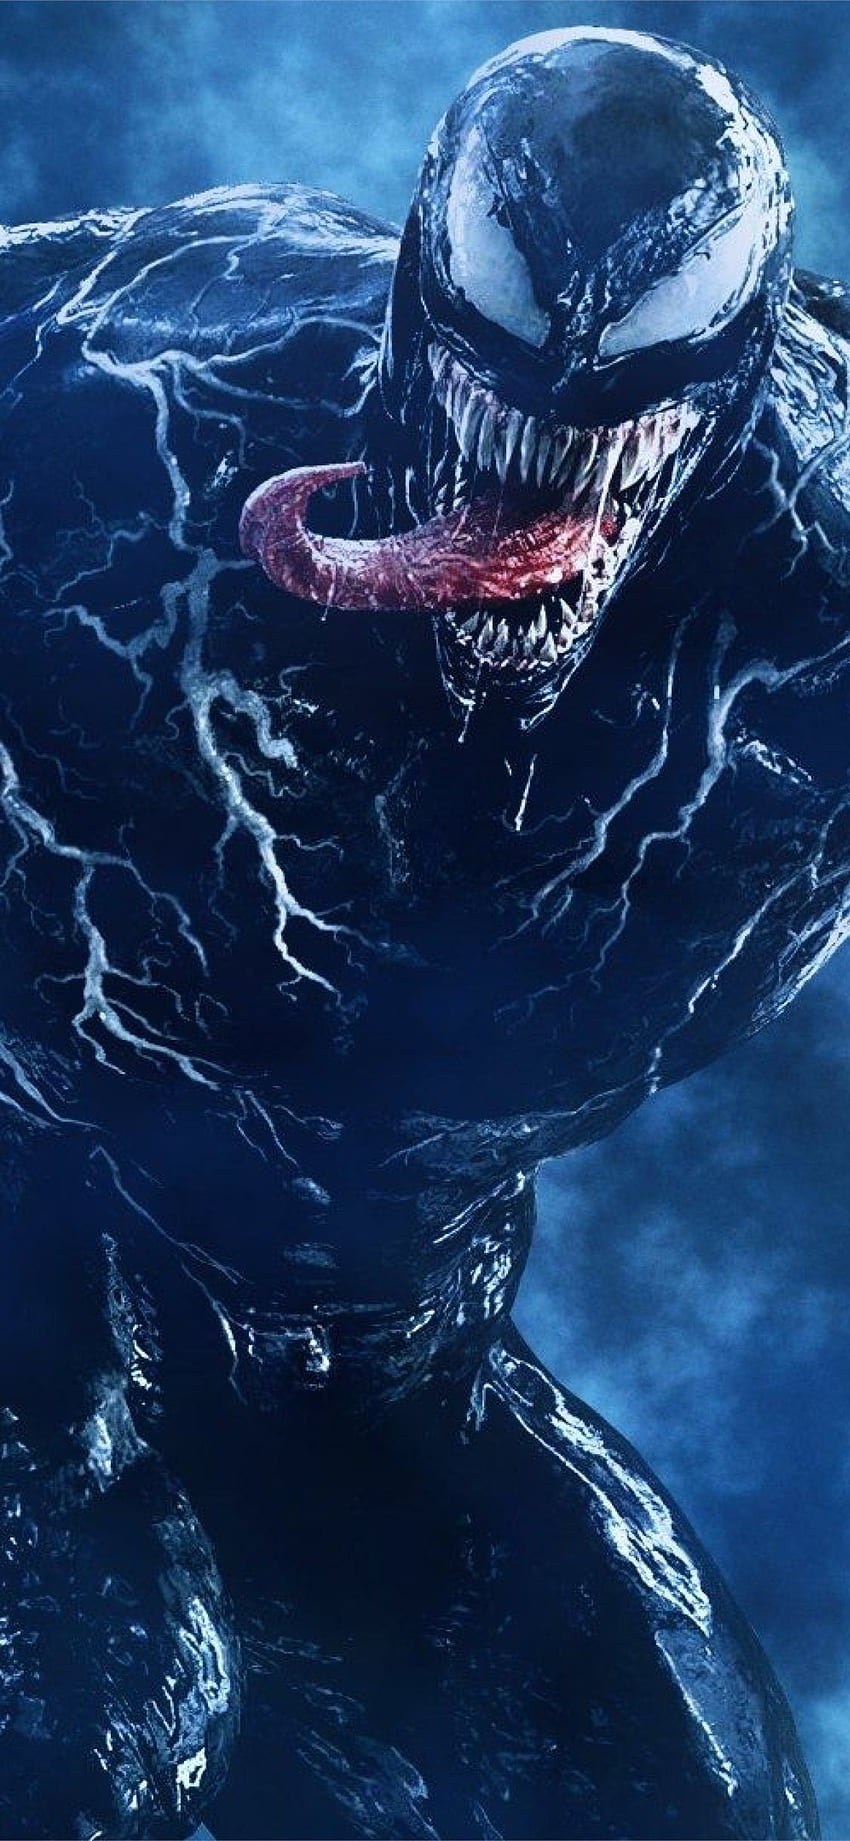 Venom | Marvel Venom Wallpaper Download | MobCup